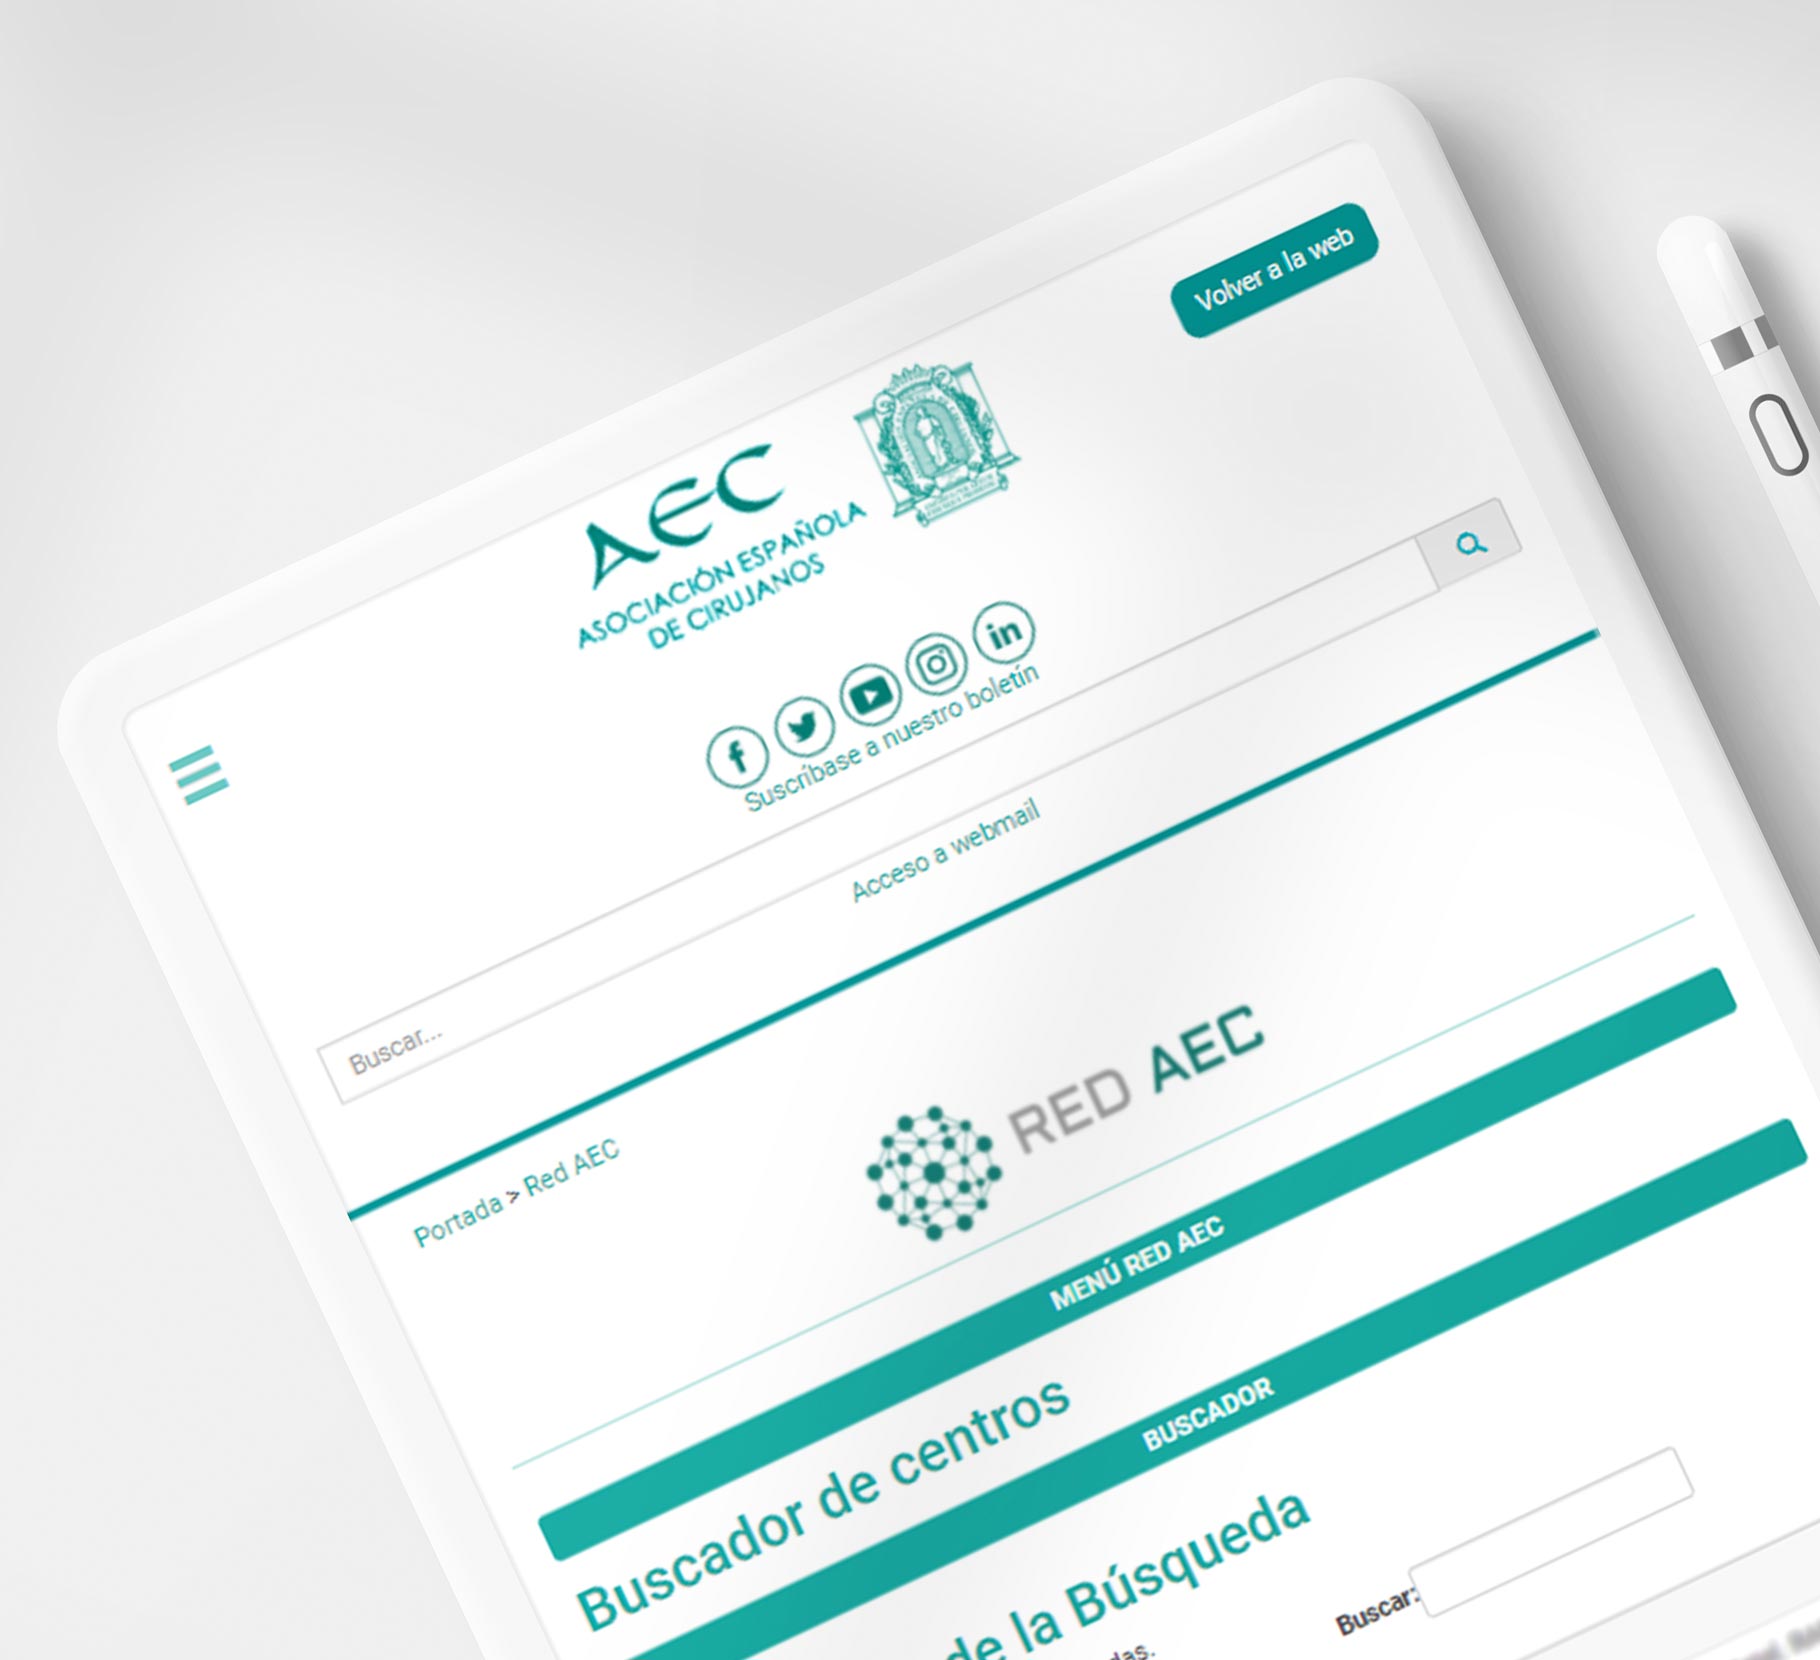 Asociación Española de Cirujanos (AEC) – Red AEC